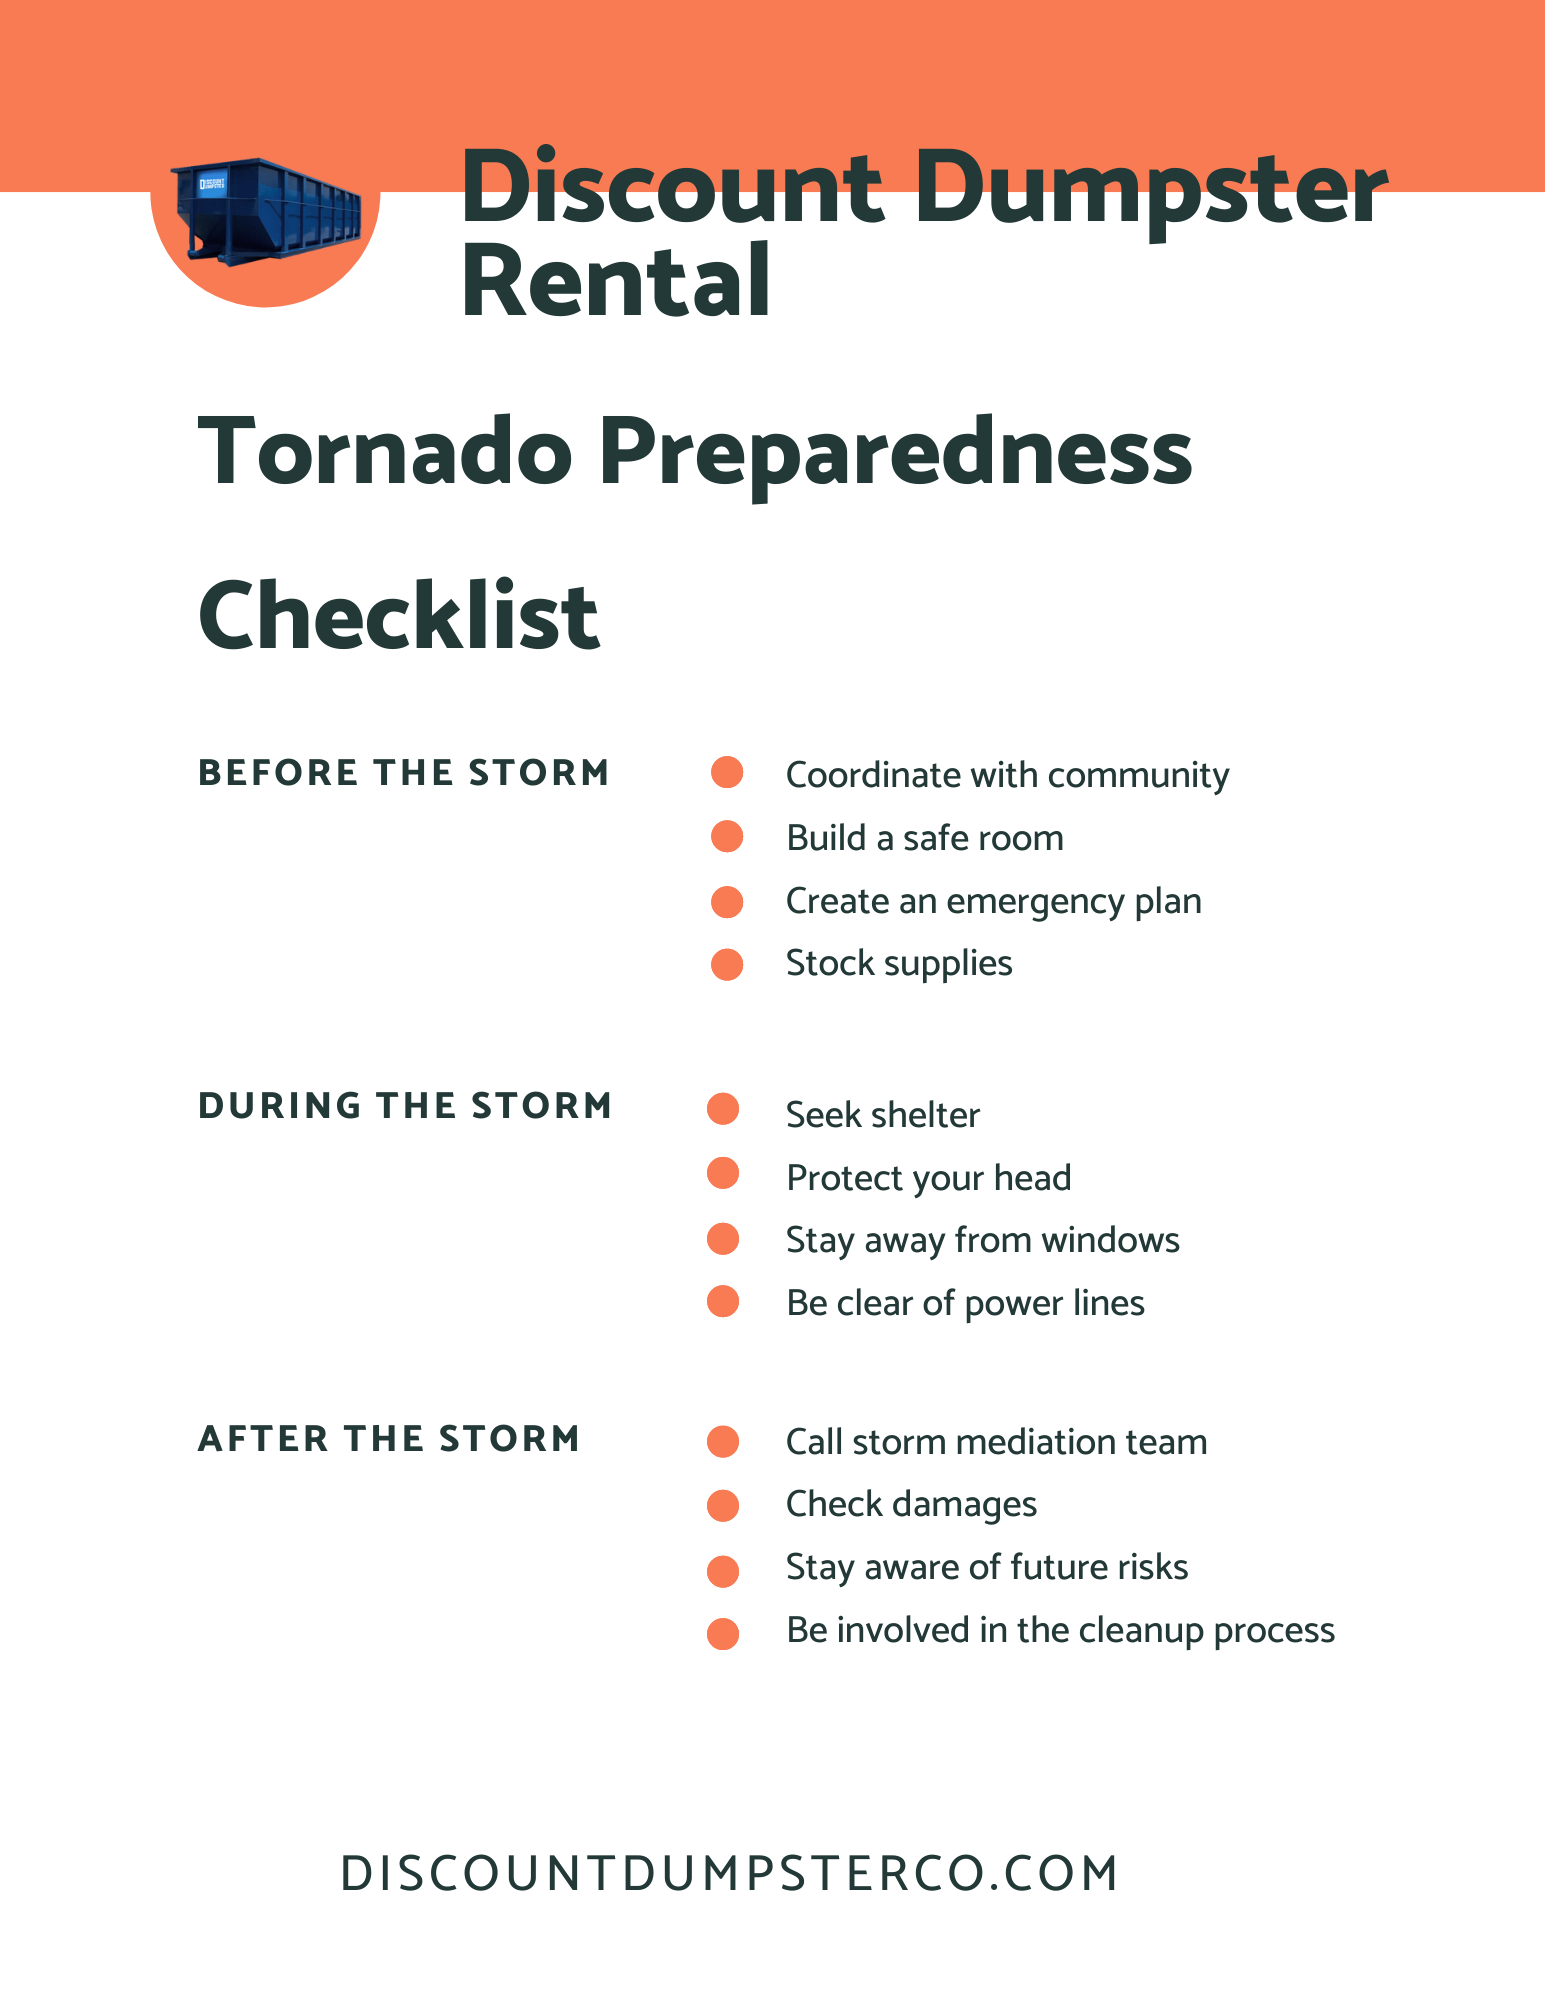 https://discountdumpsterco.com/wp-content/uploads/How-to-prepare-for-a-tornado-checklist.png